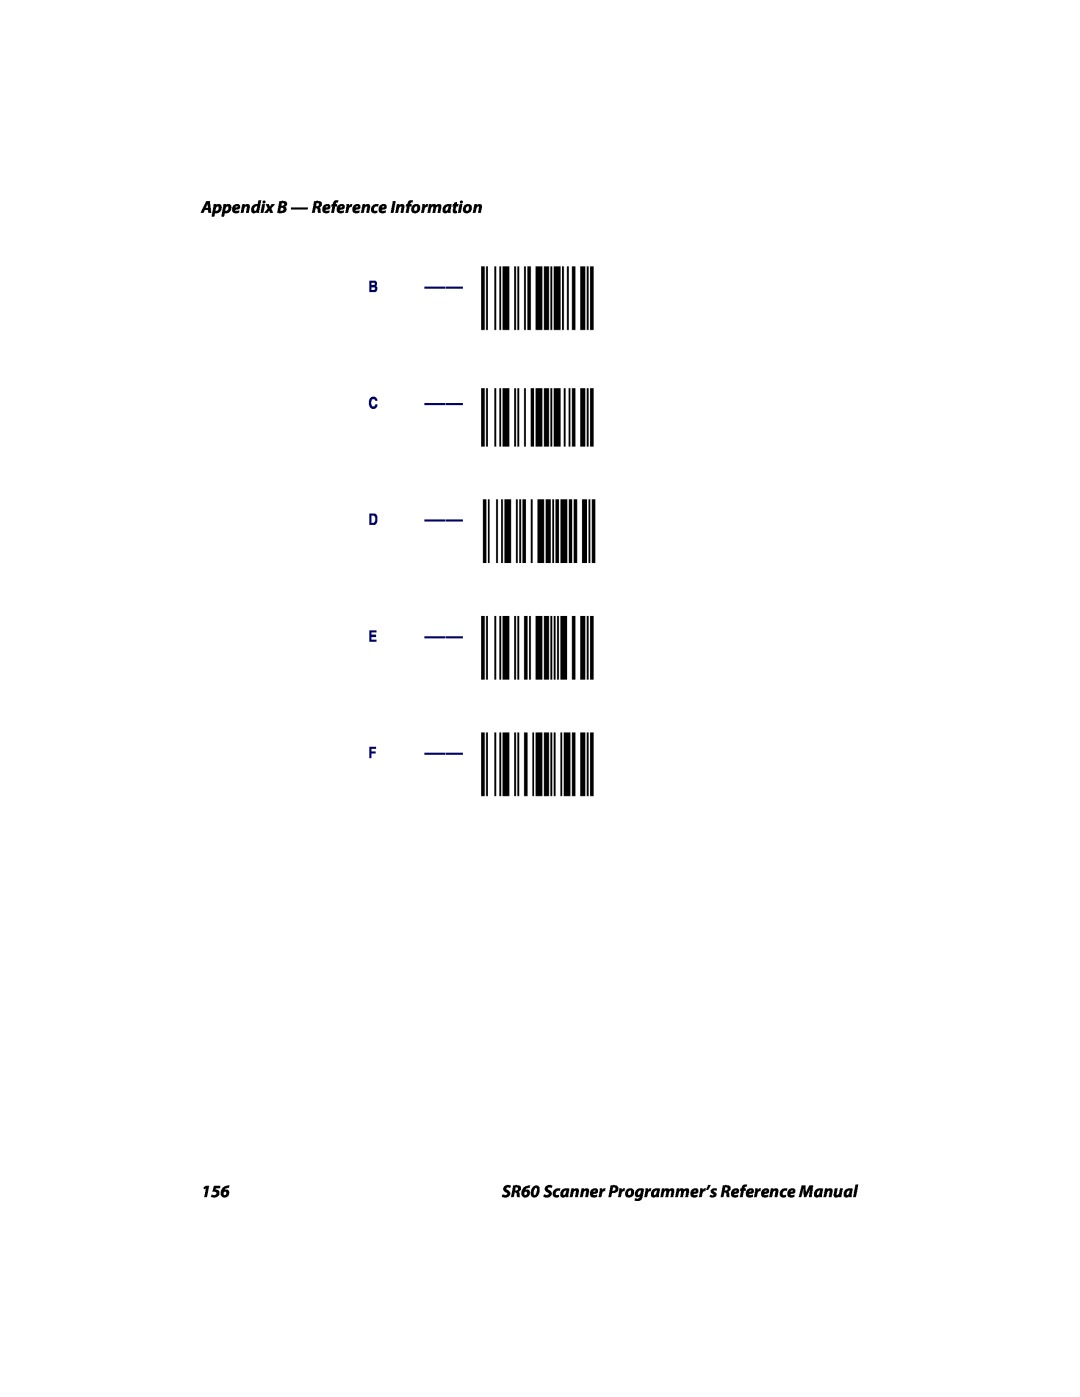 Intermec manual Appendix B - Reference Information, B C D E F, SR60 Scanner Programmer’s Reference Manual 